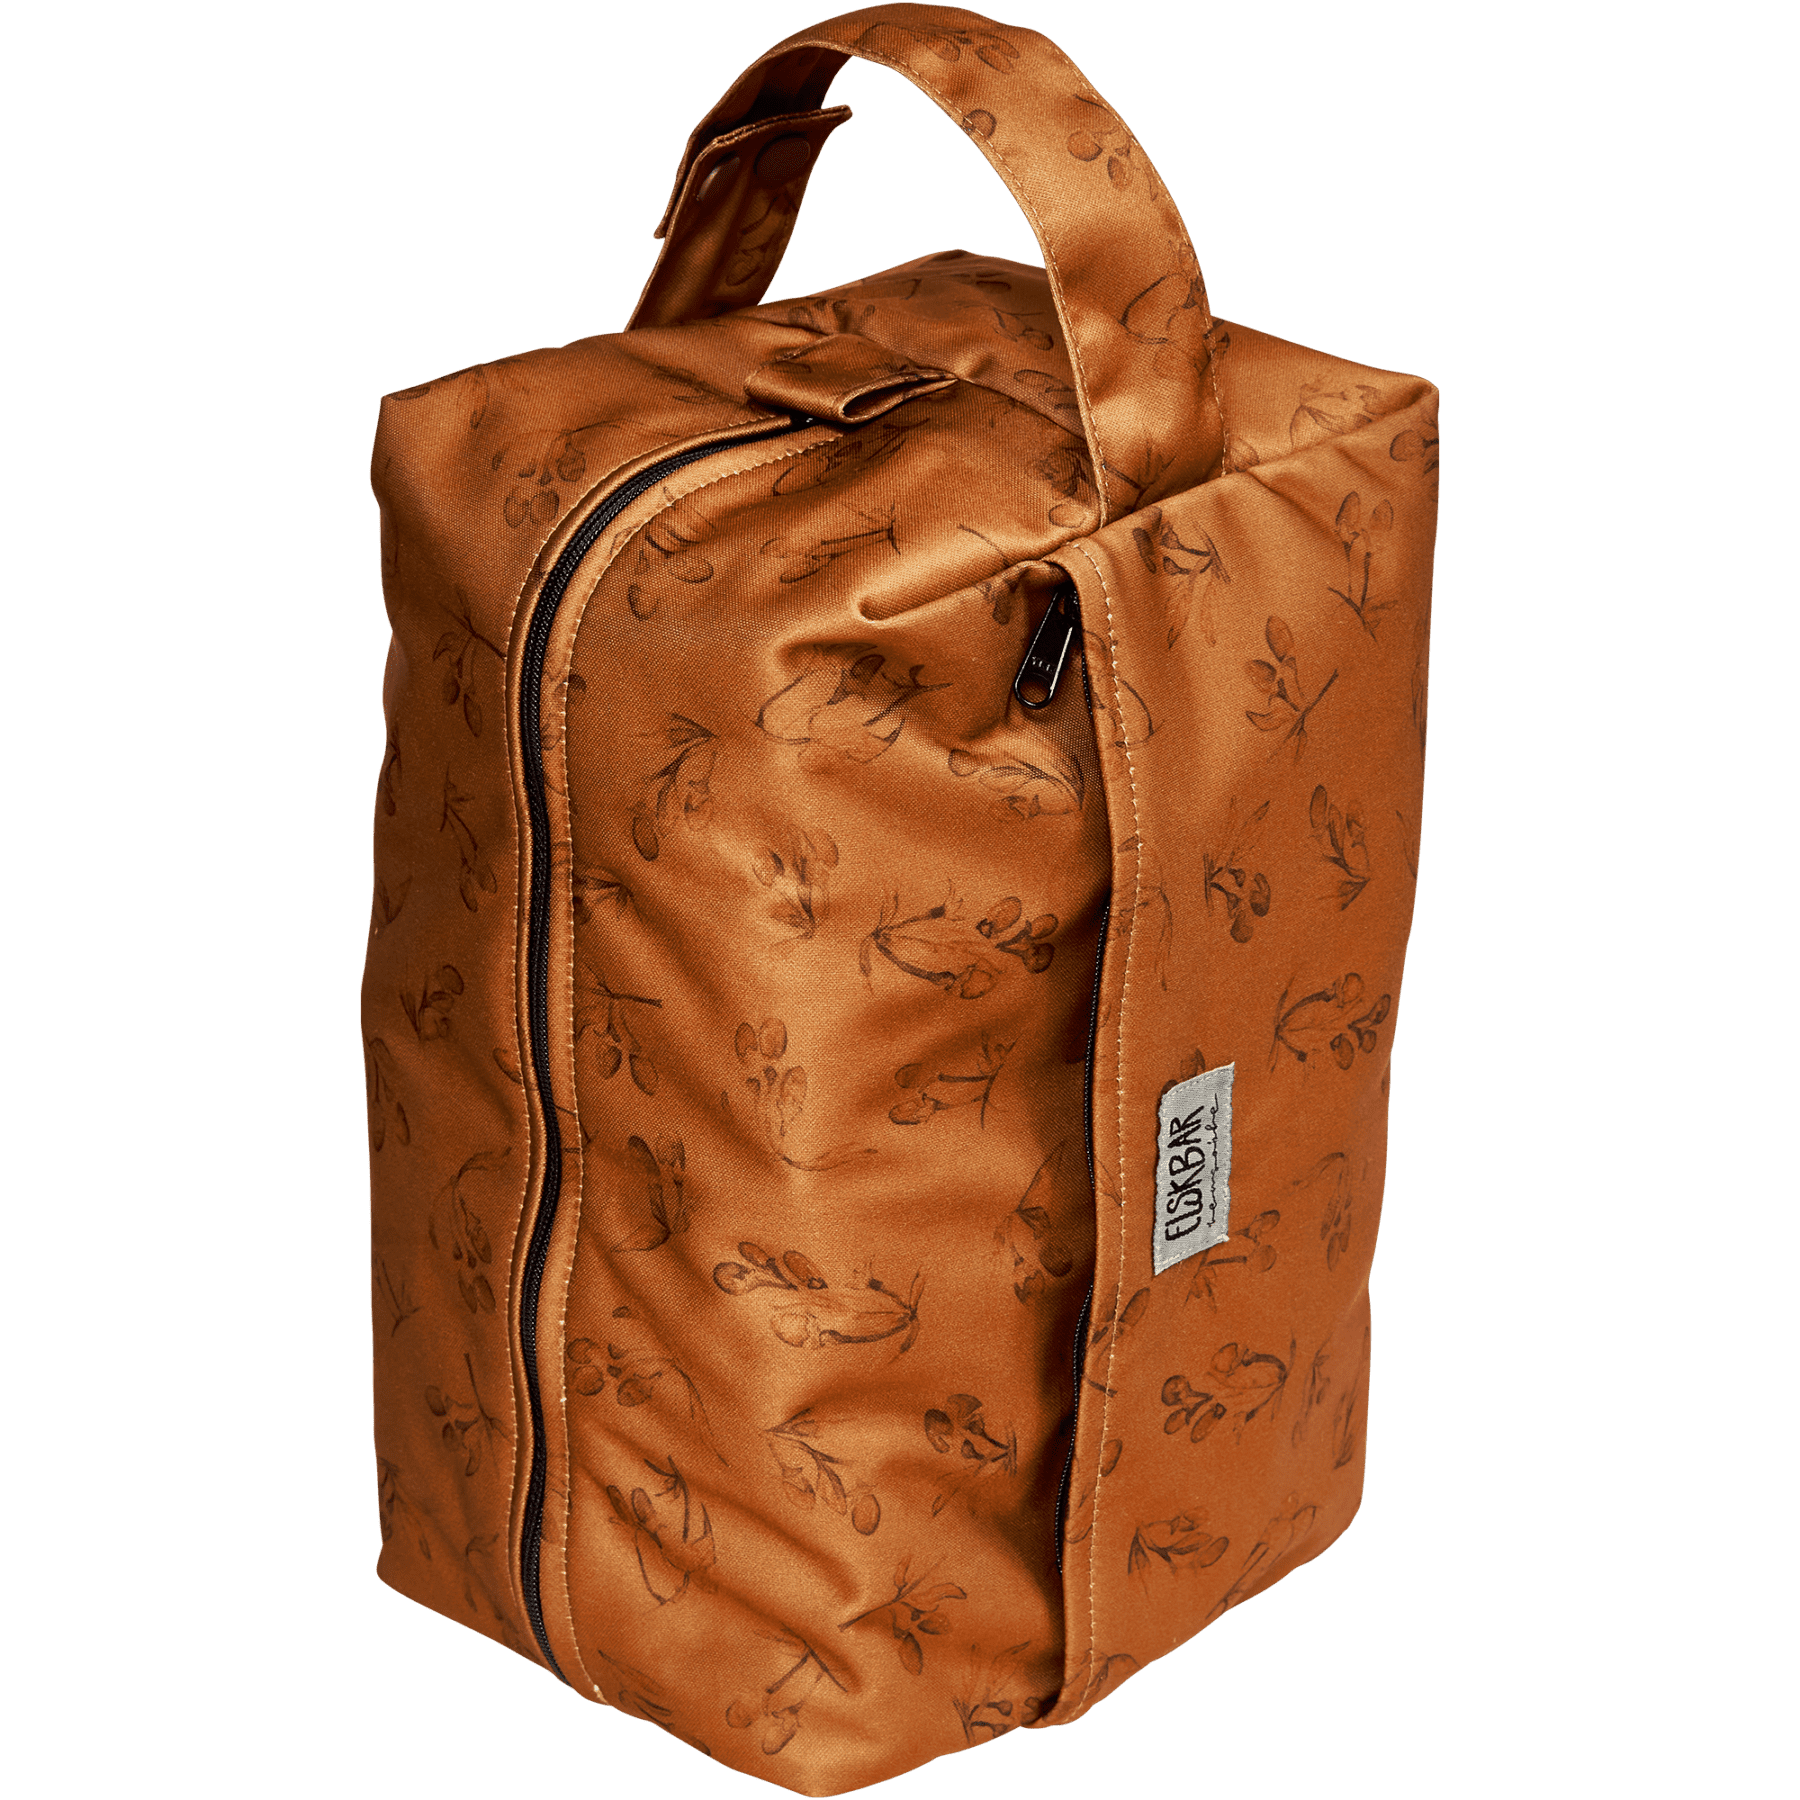 Pod wetbag for cloth diapers - goji